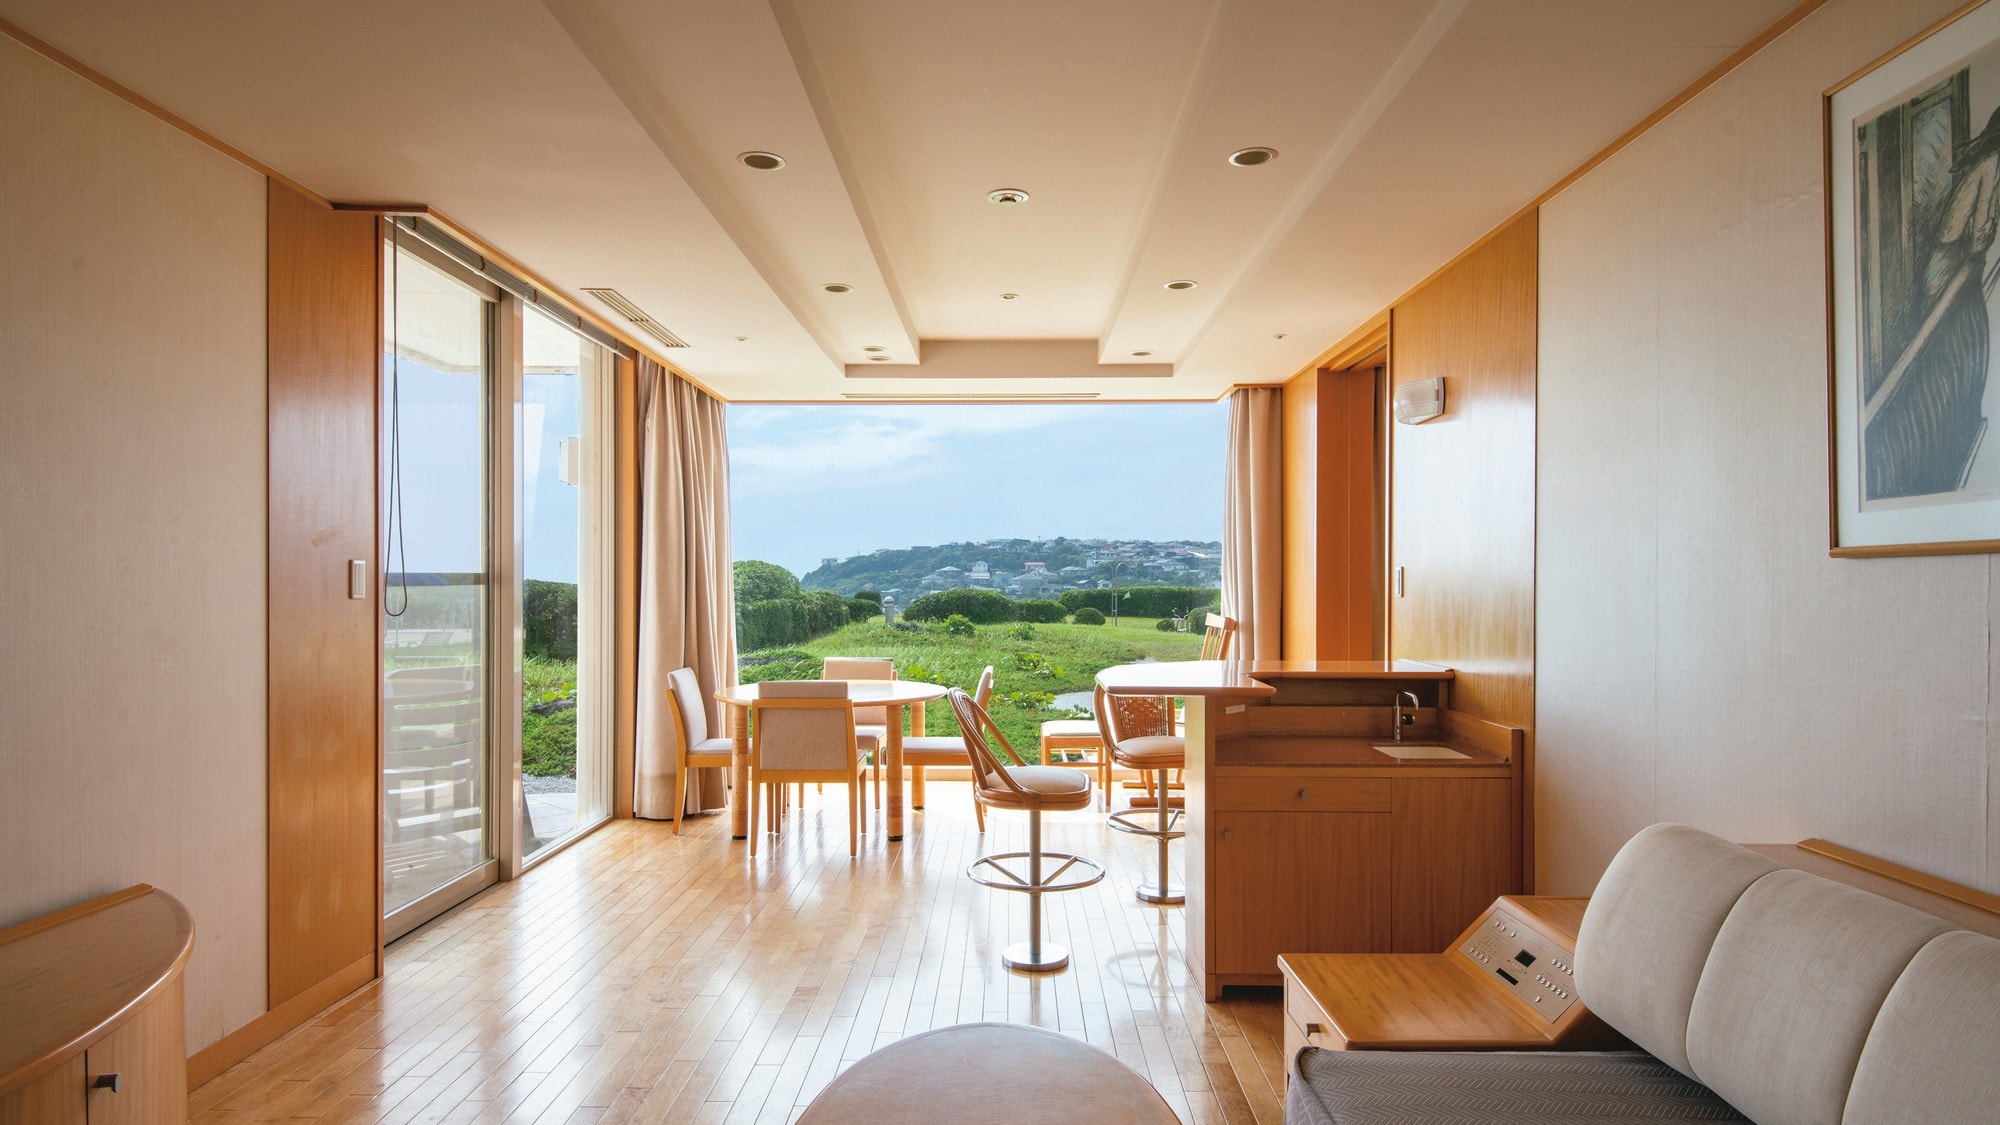 Shichirigahama Suite (3rd floor / 72 sqm / No smoking / Cityscape over the outdoor garden pool Sagami Bay Enoshima)